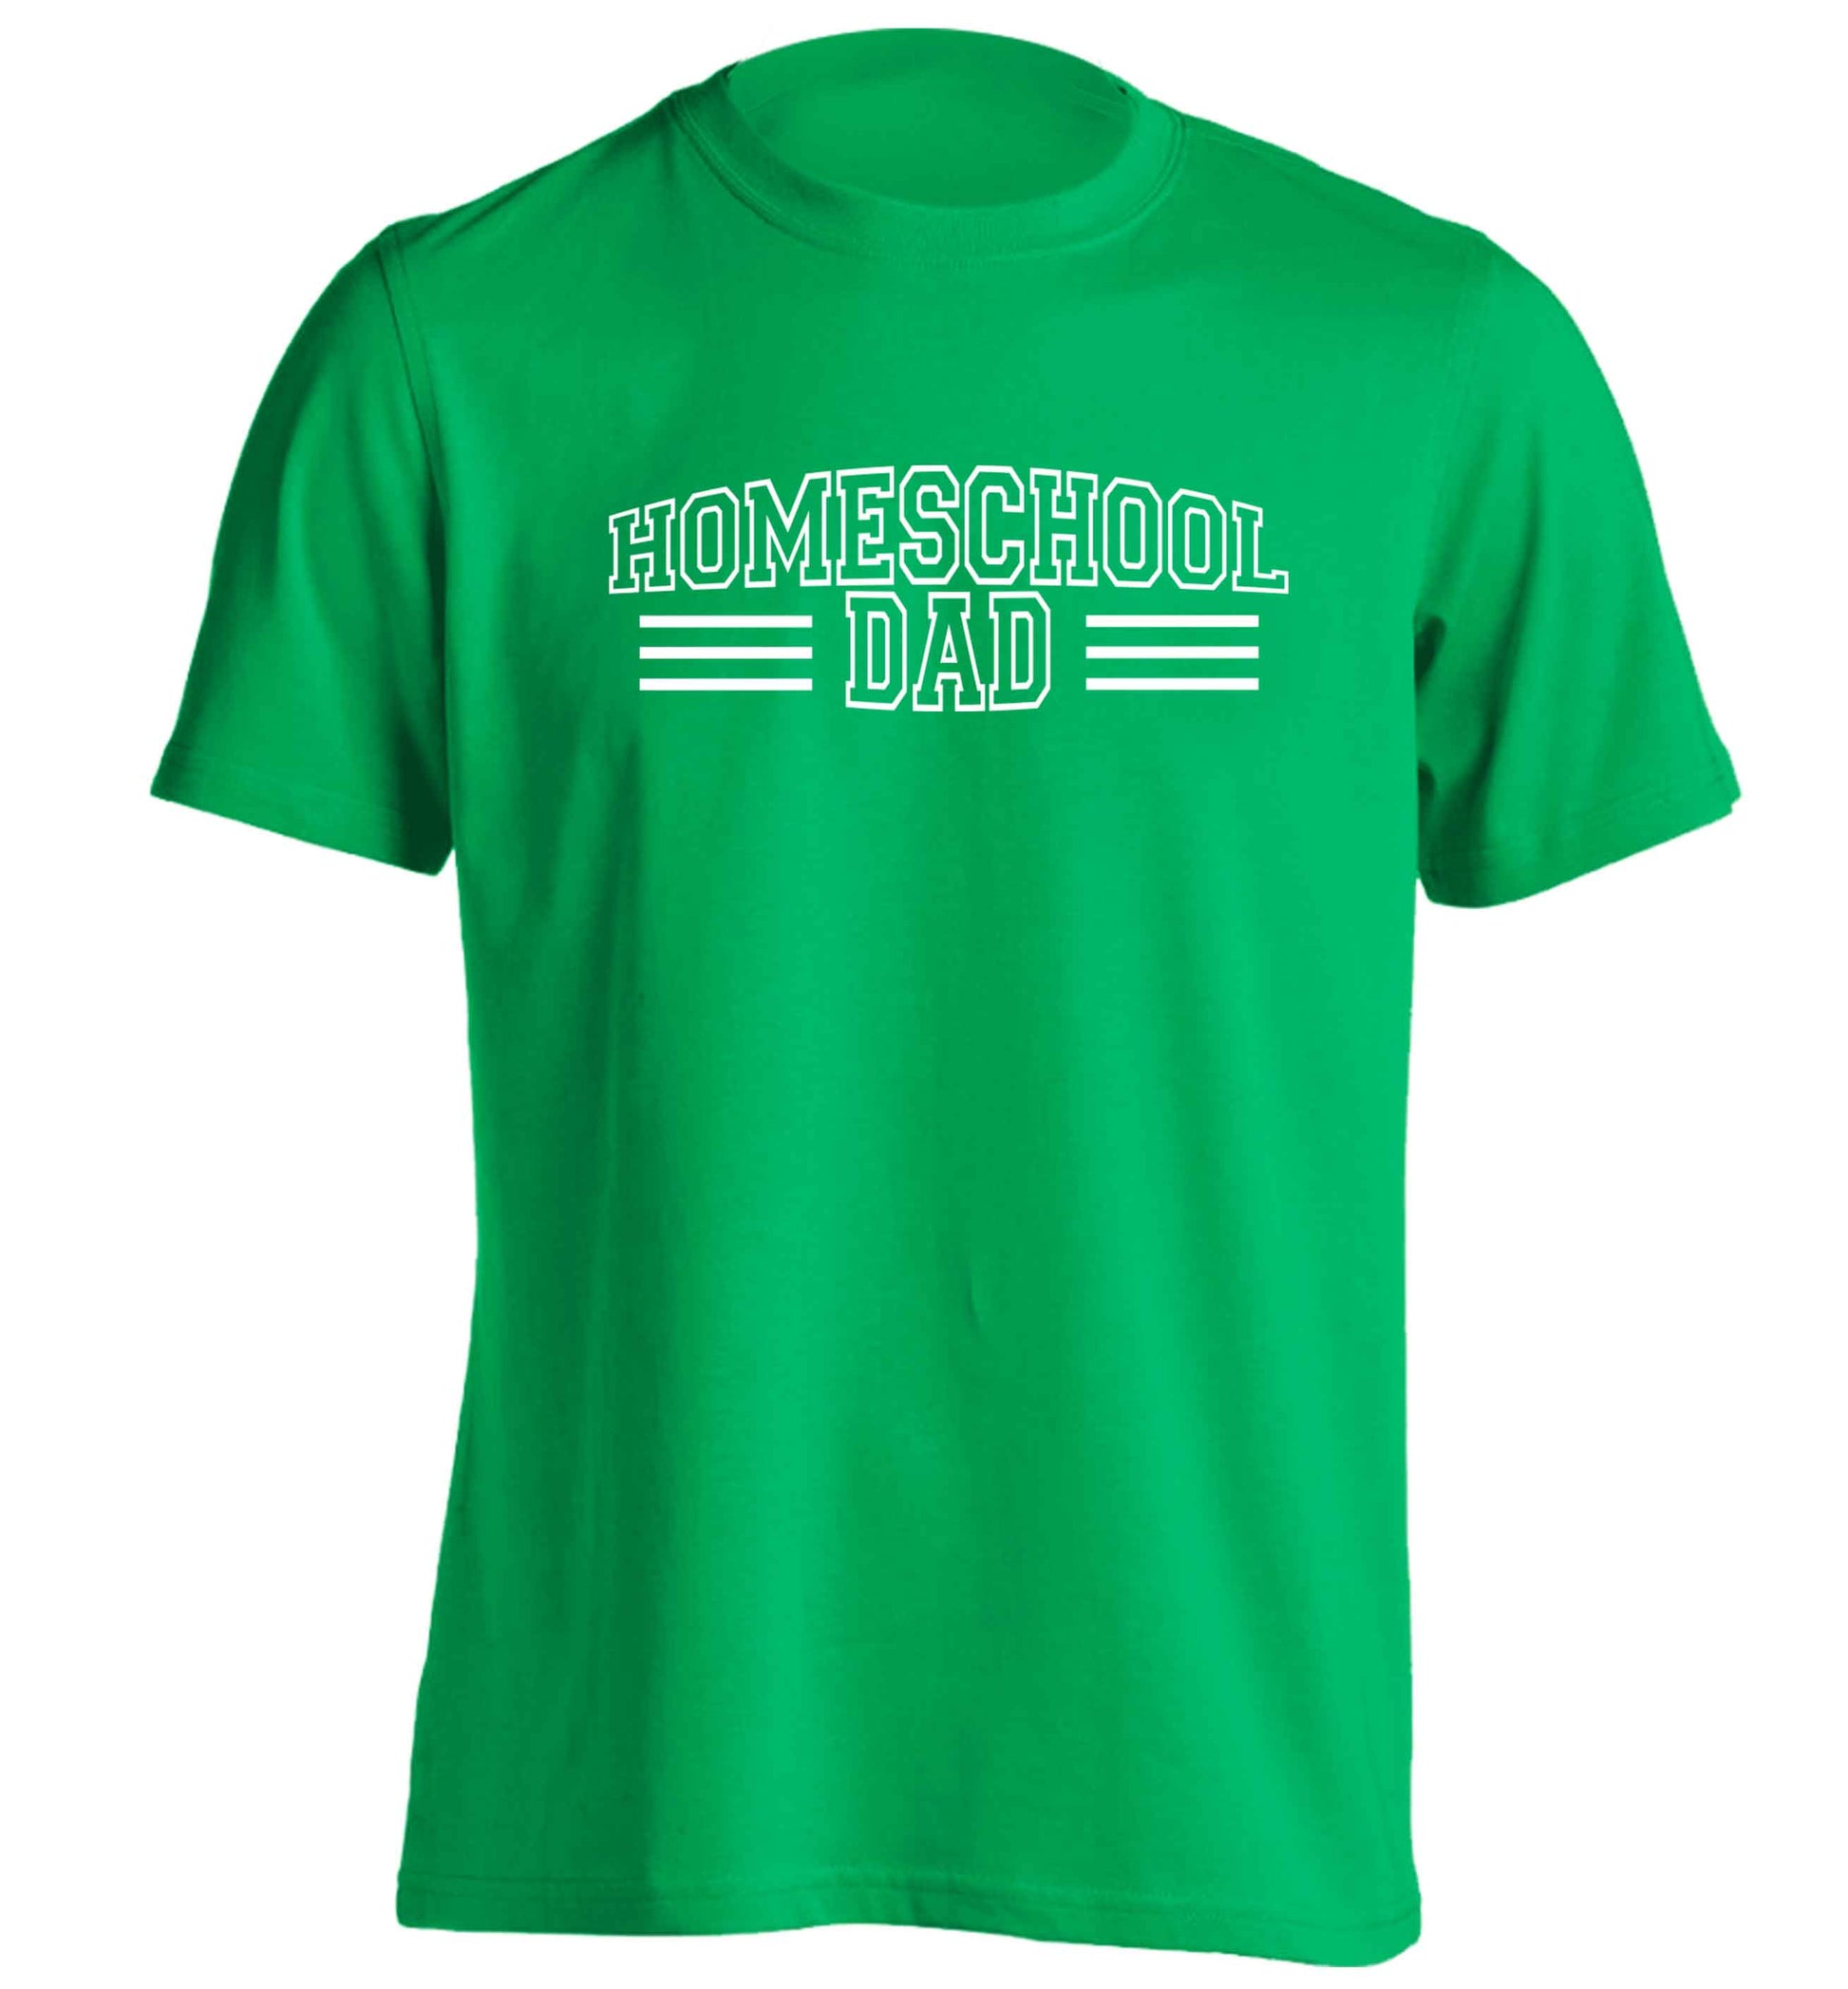 Homeschool dad adults unisex green Tshirt 2XL